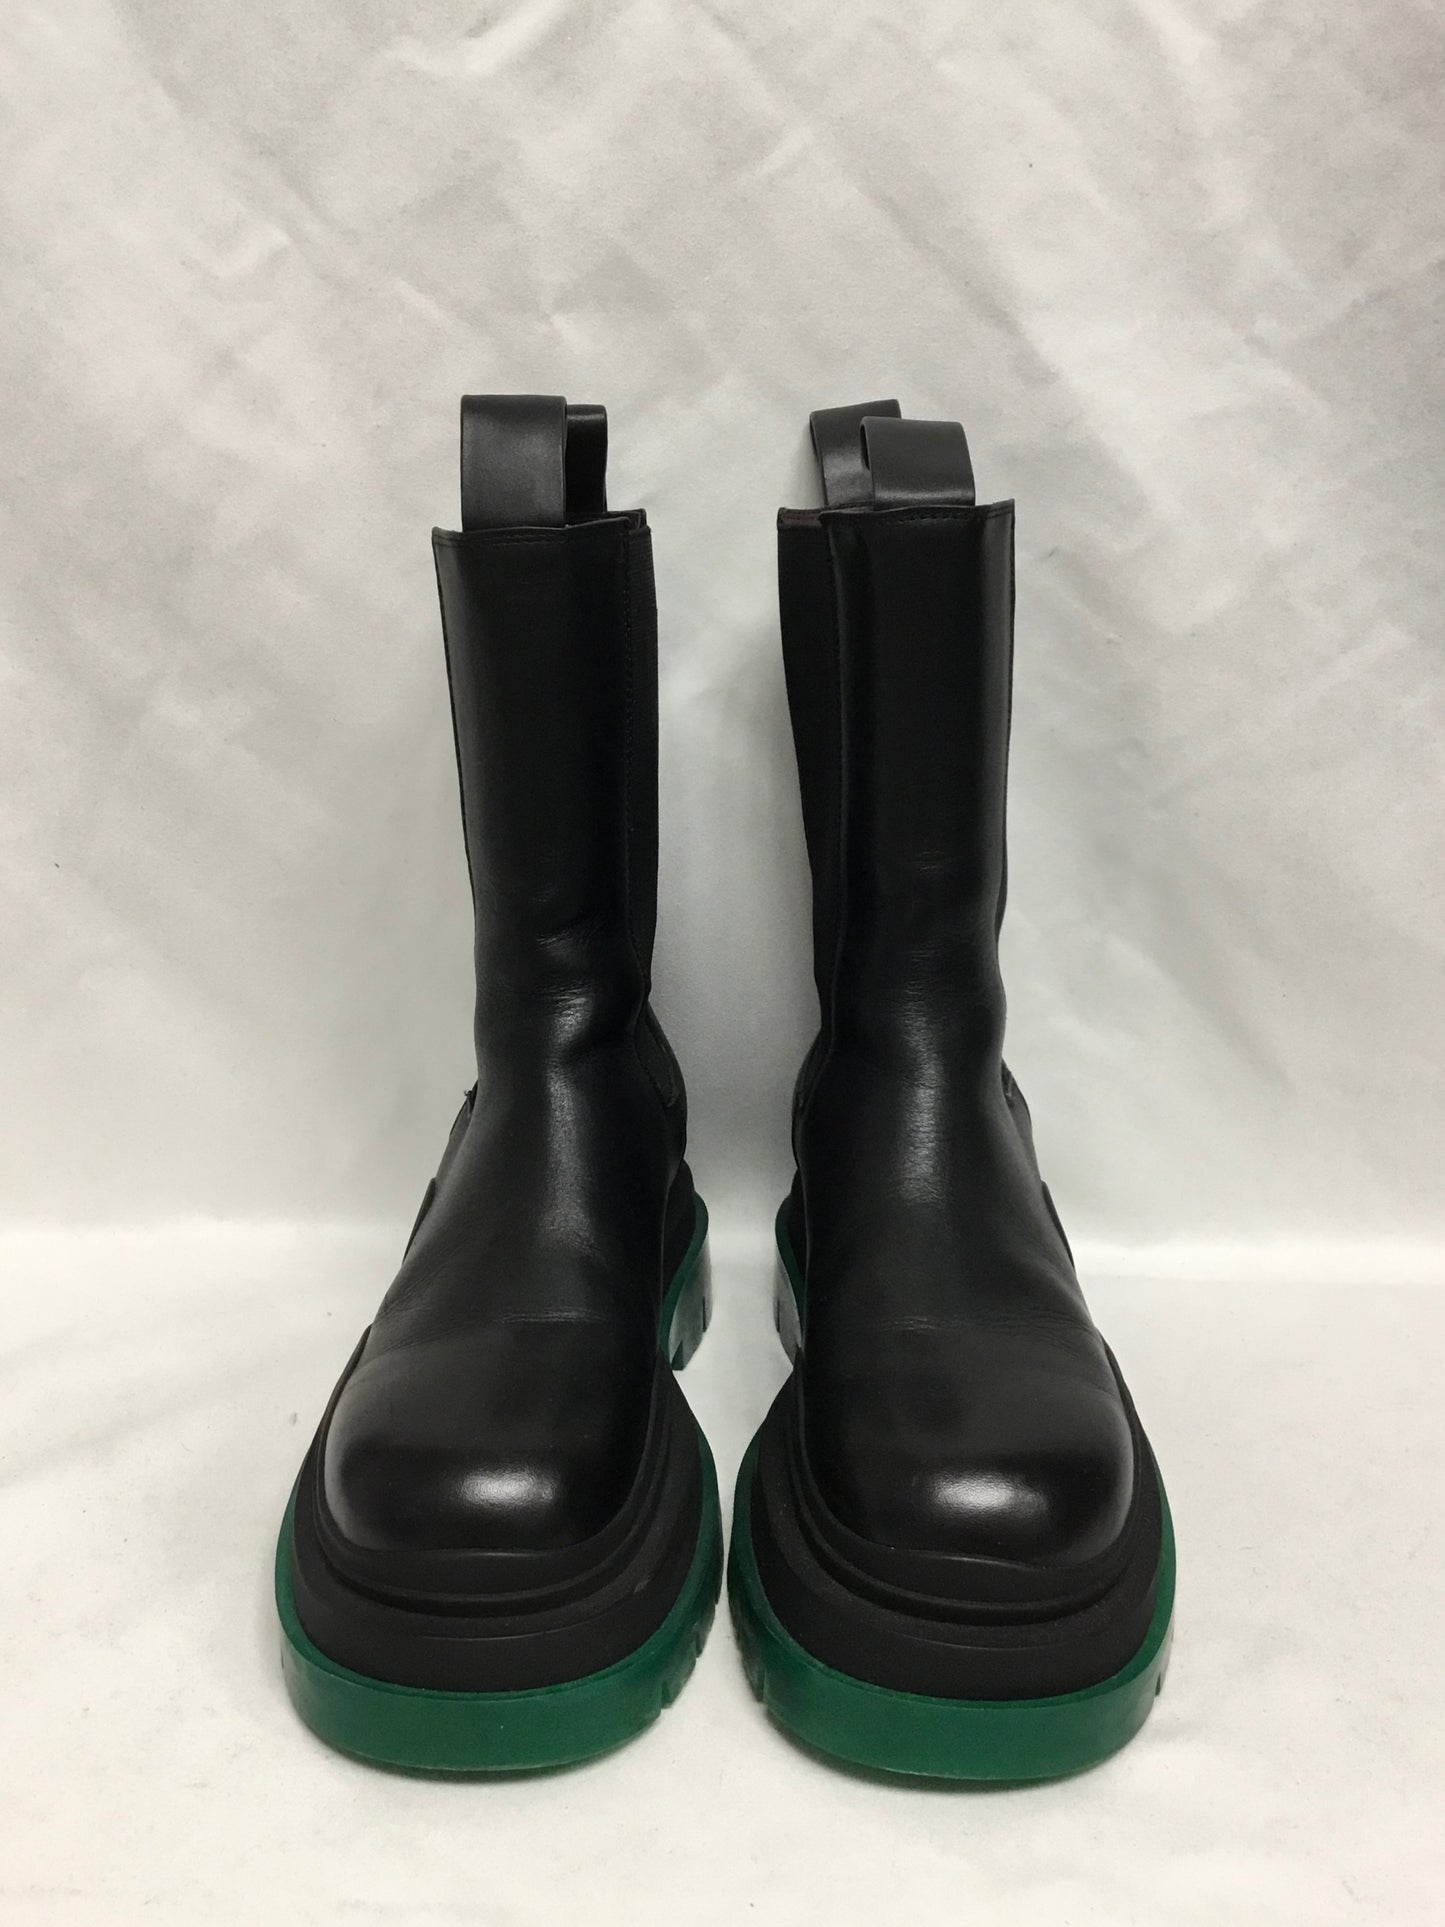 Bottega Veneta Black Leather with Green Rubber Sole Boots